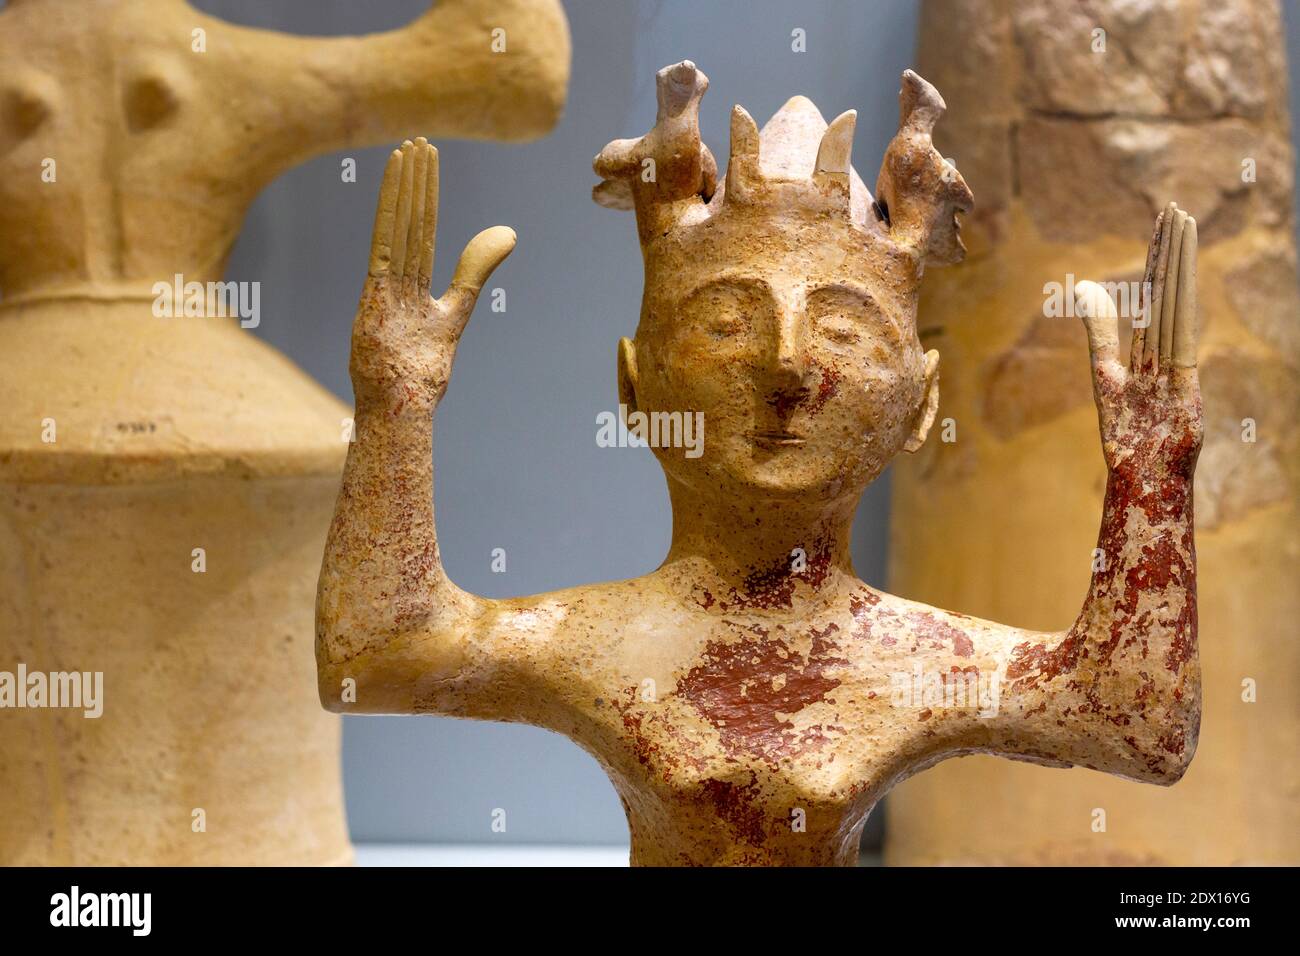 Heraklion, Crete, Greece. Poppy Goddess figurine on display in the Heraklion Archaeological Museum. Stock Photo